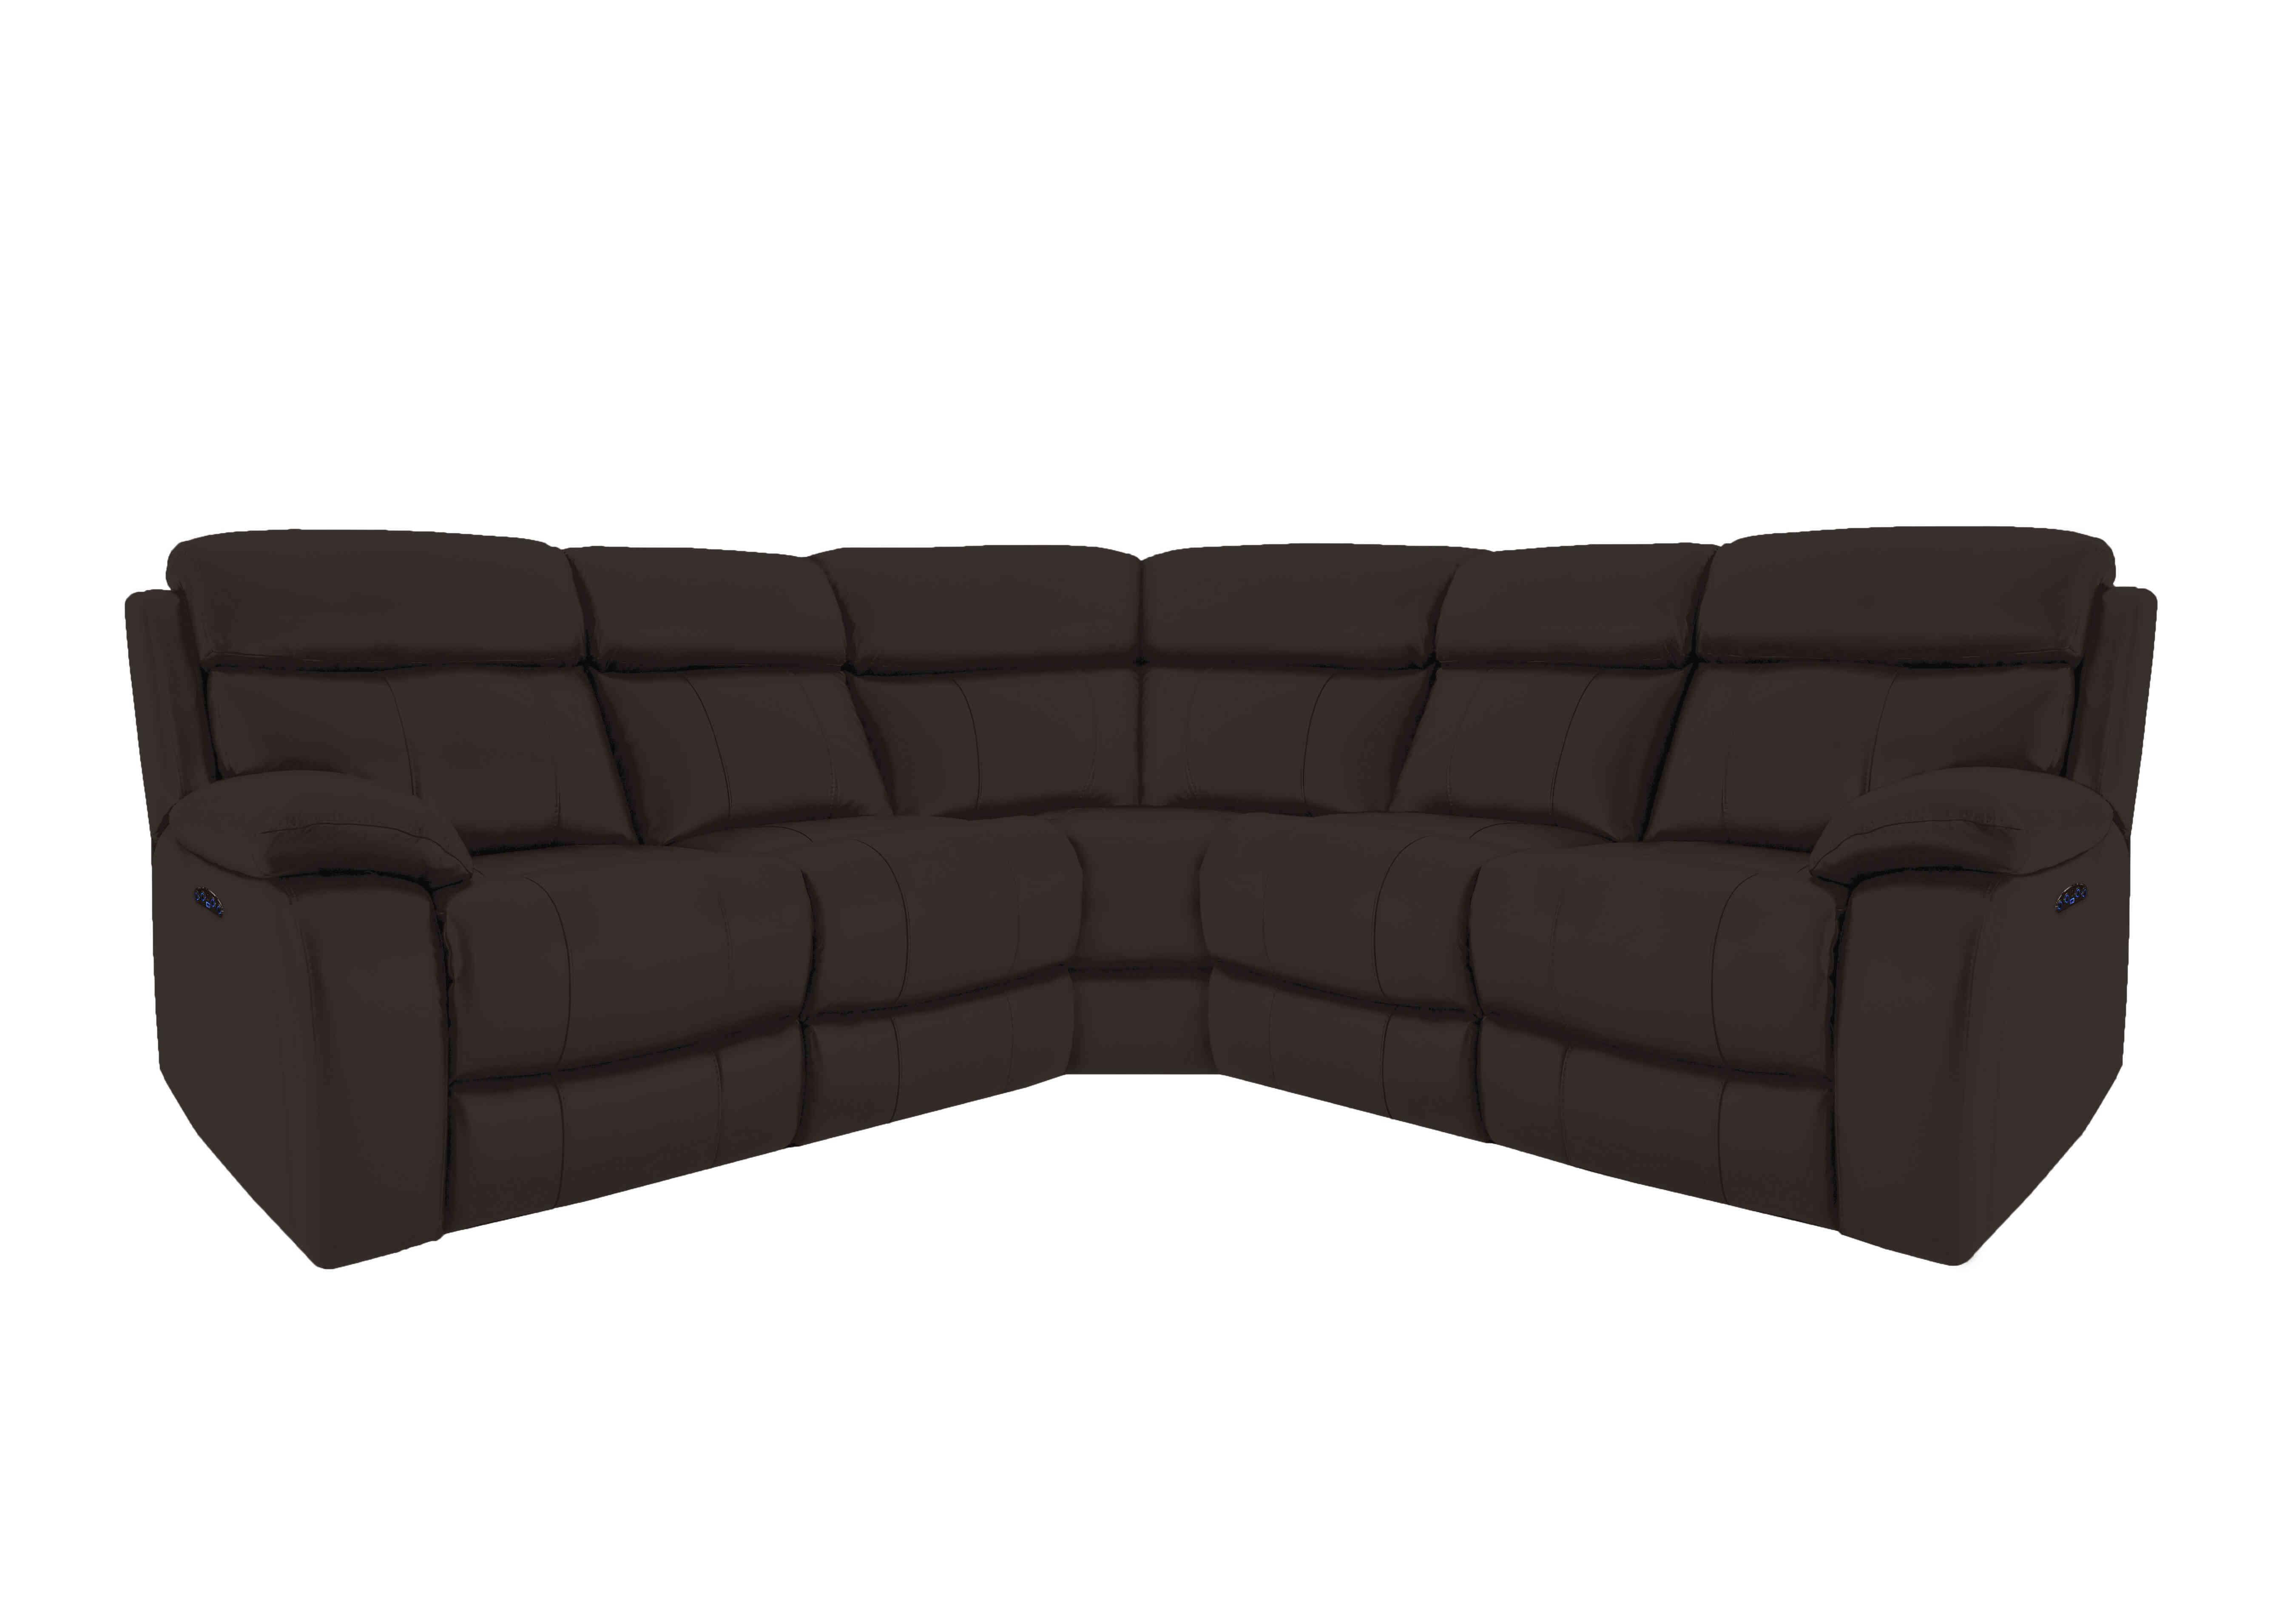 Moreno Leather Power Recliner Corner Sofa with Power Headrests in Bv-1748 Dark Chocolate on Furniture Village